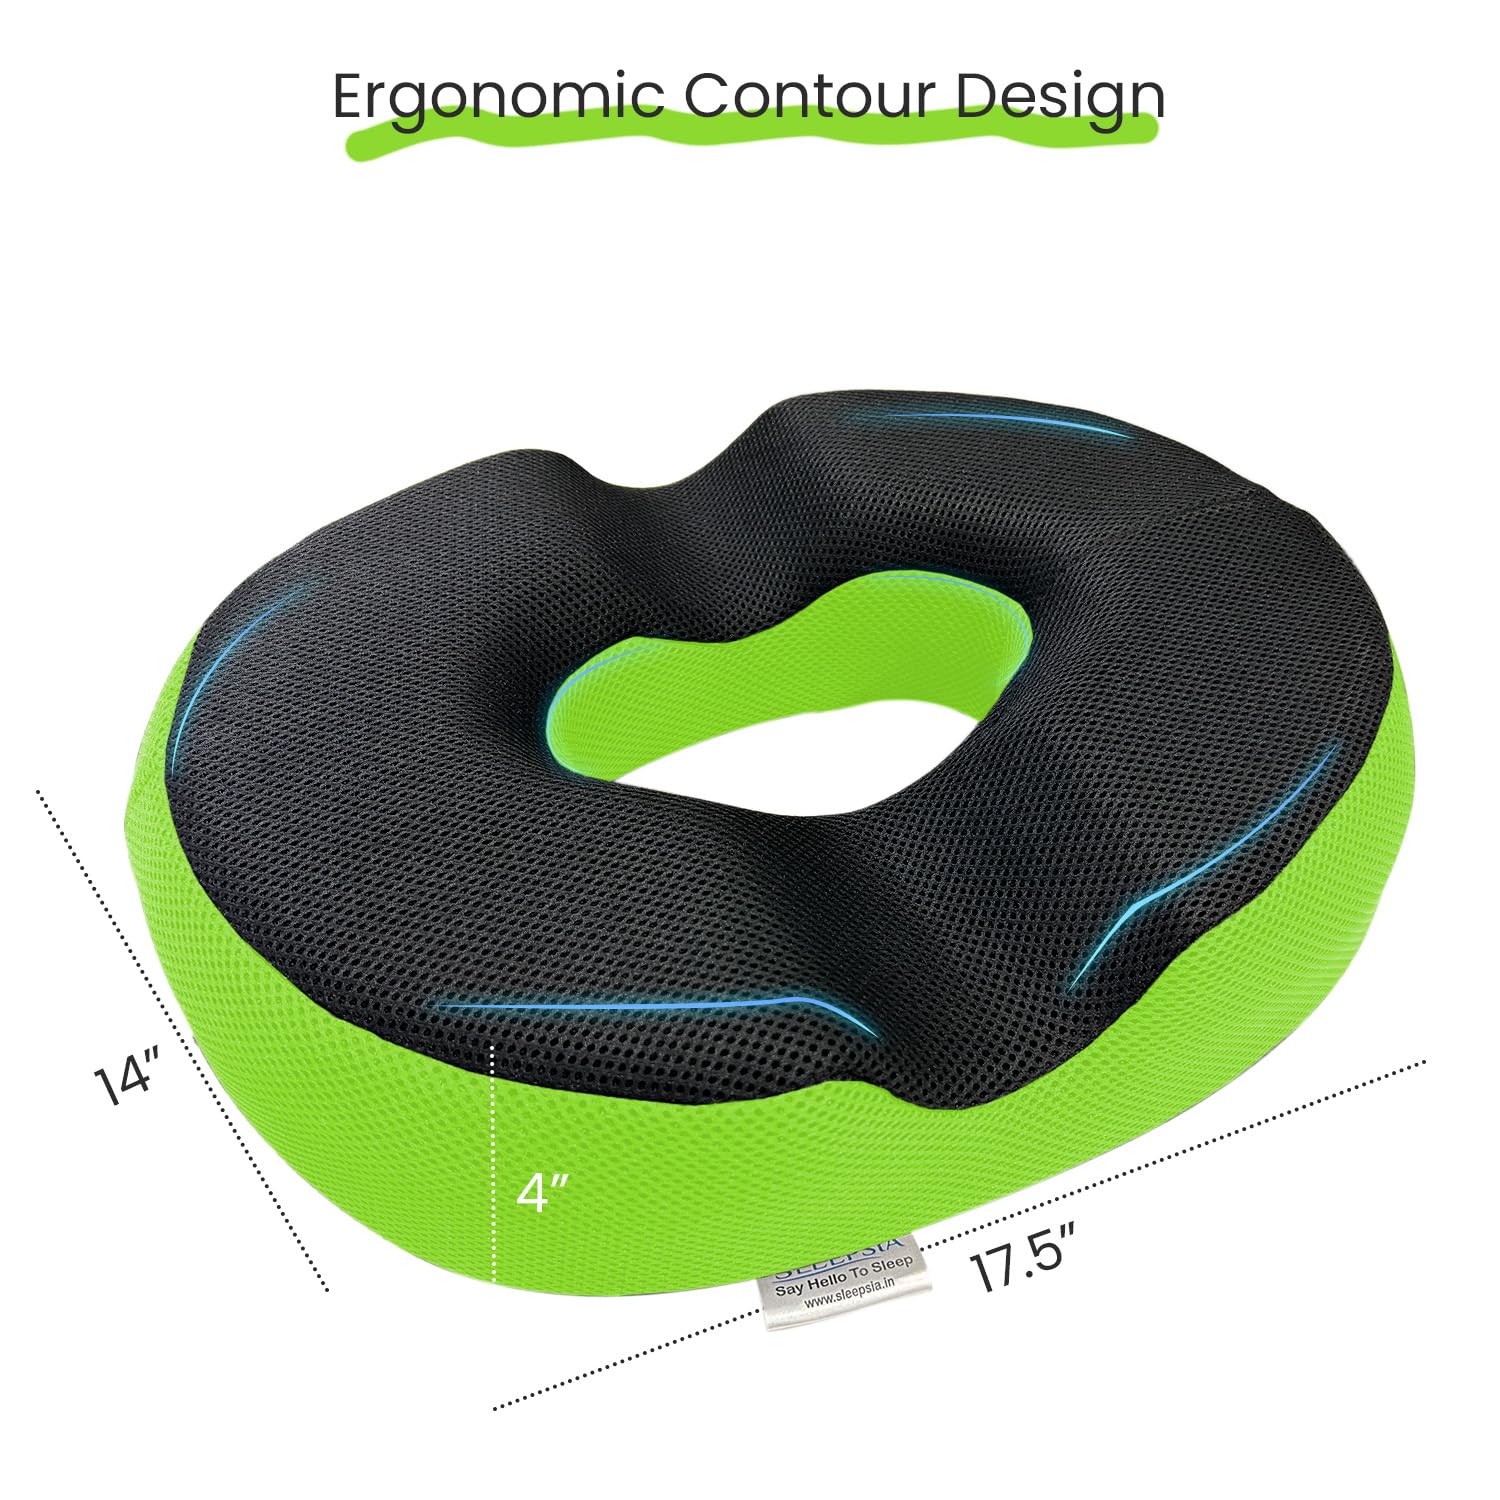 Orthopedic Gel Memory Foam Donut Seat Cushion for Tailbone, Sciatica & Back Pain Relief